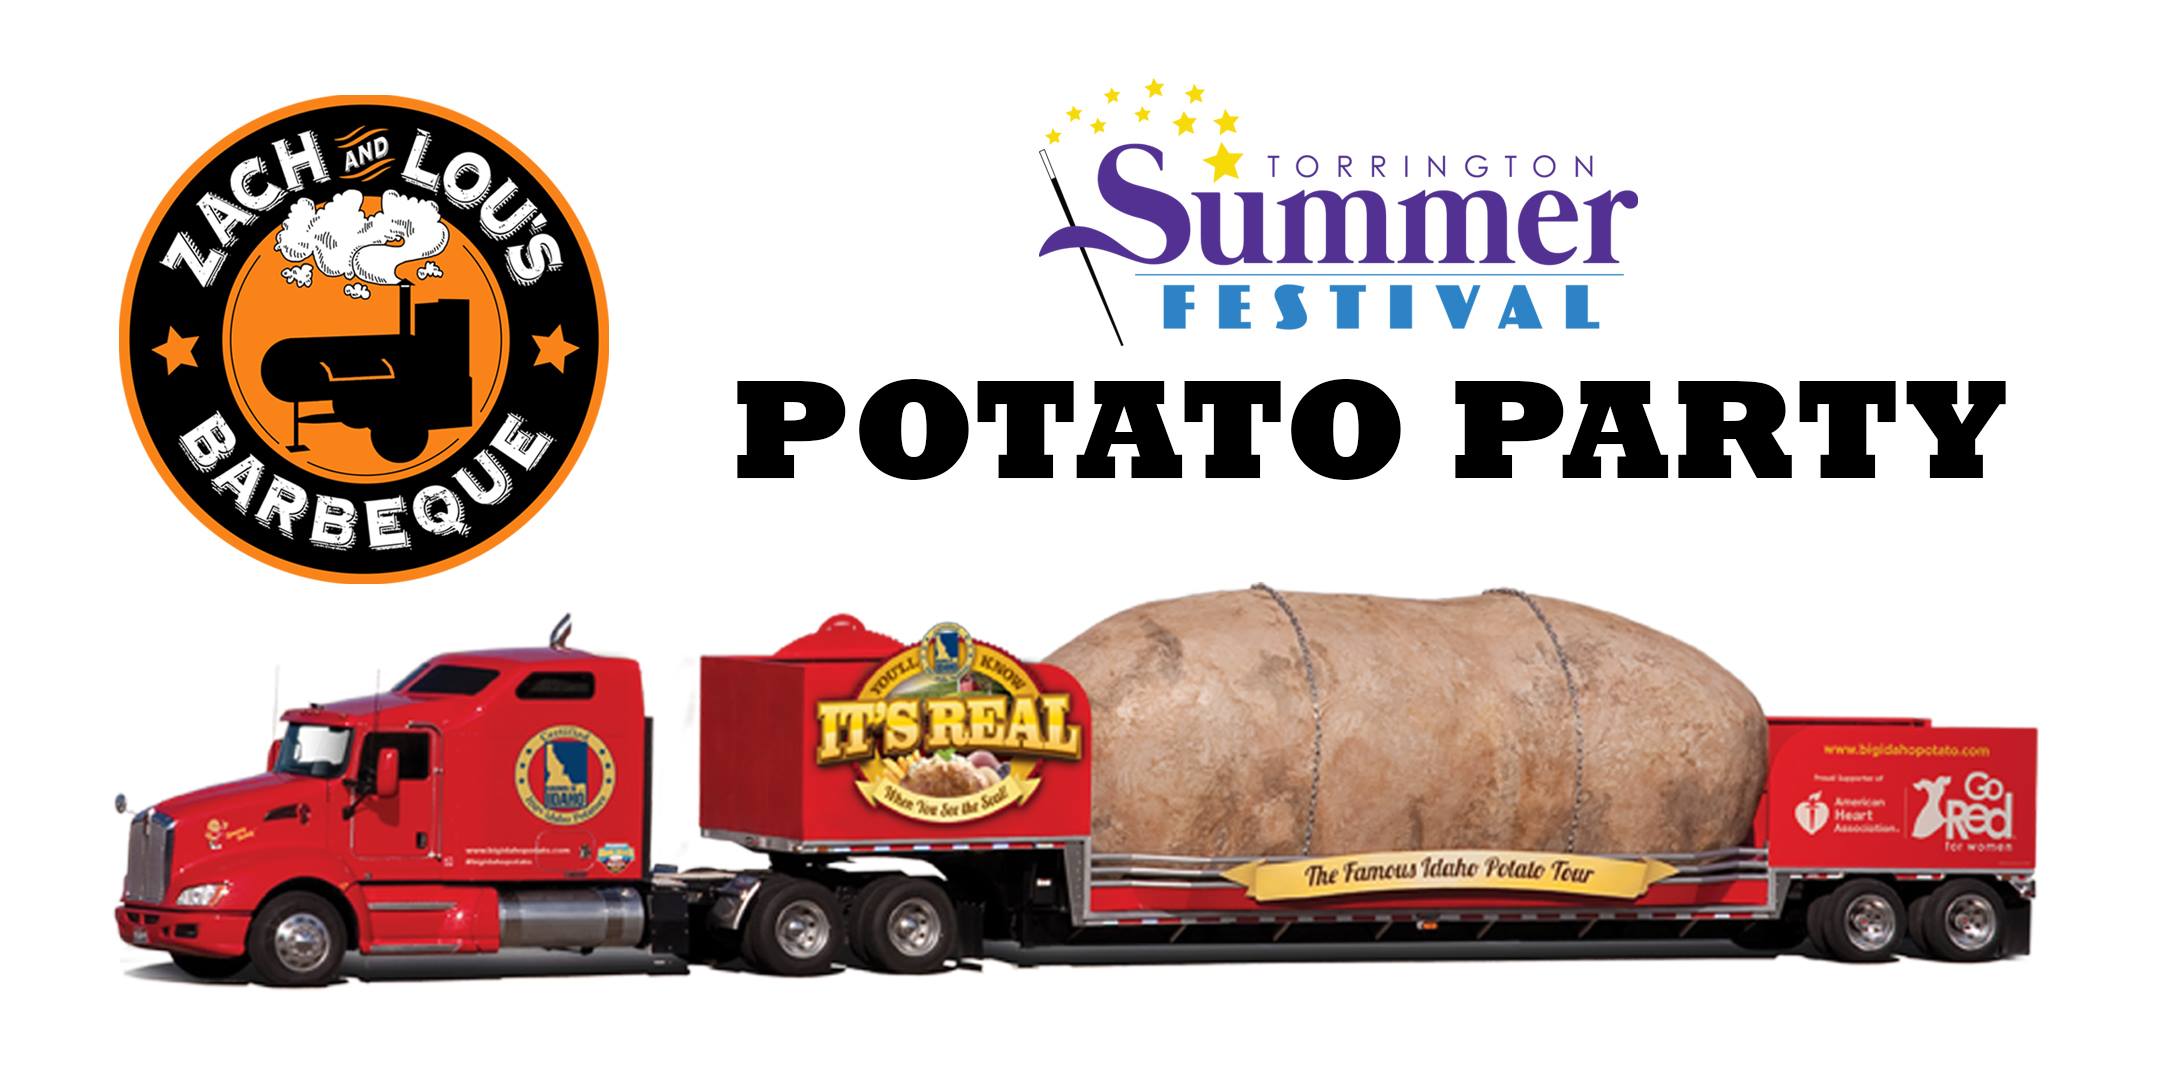 Torrington Potato Party & Summer Festival